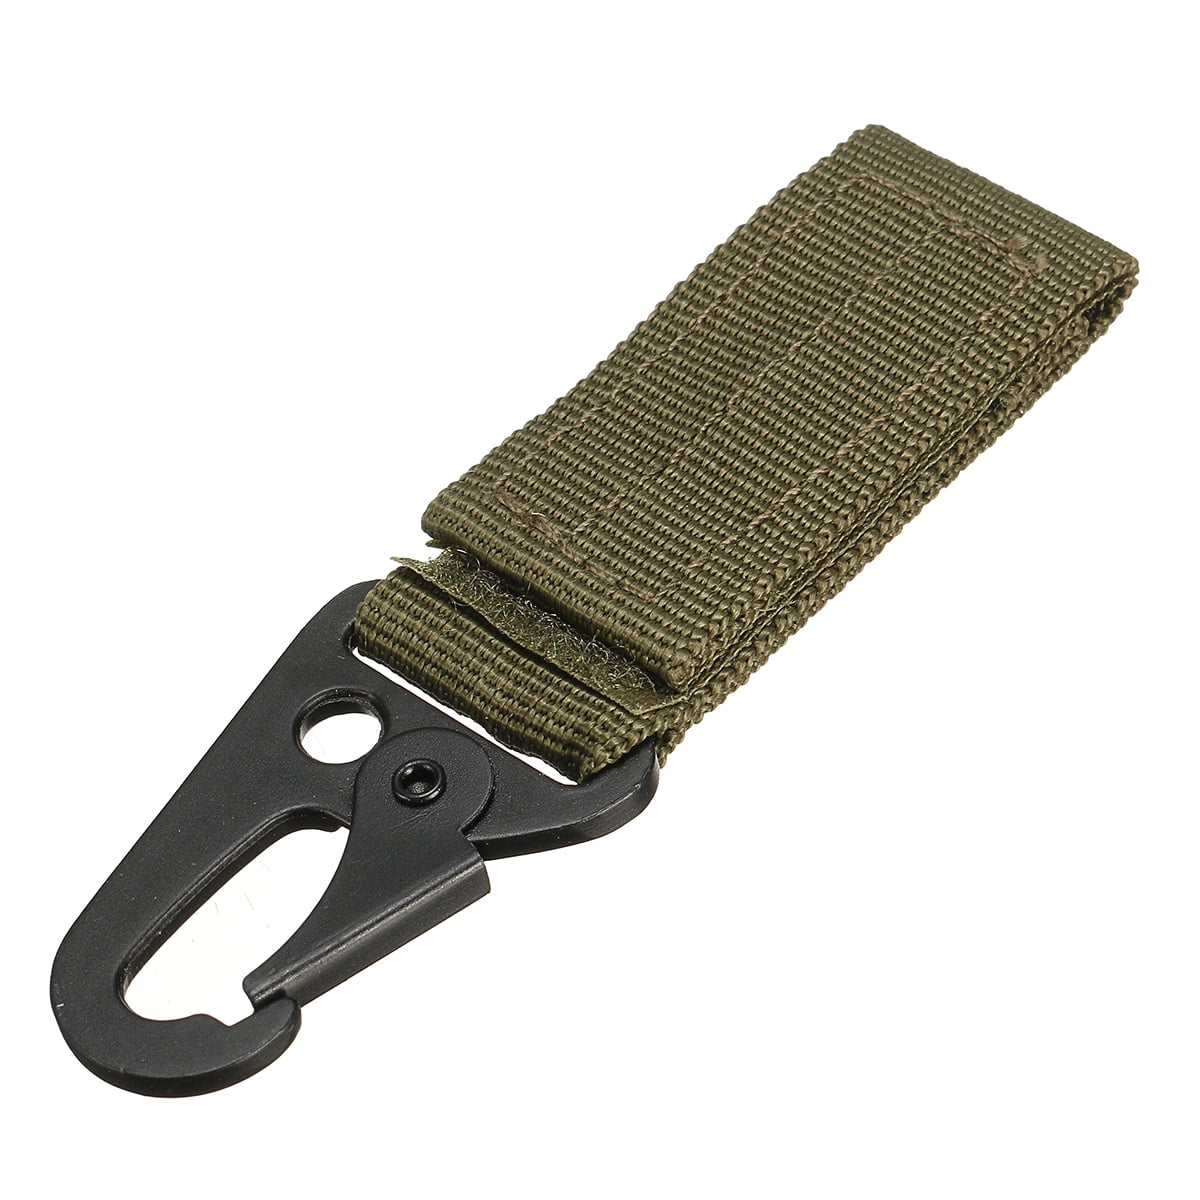 Aubess Carabiner Clip Military Nylon Key Hook Webbing Molle Buckle Outdoor Hanging Belt